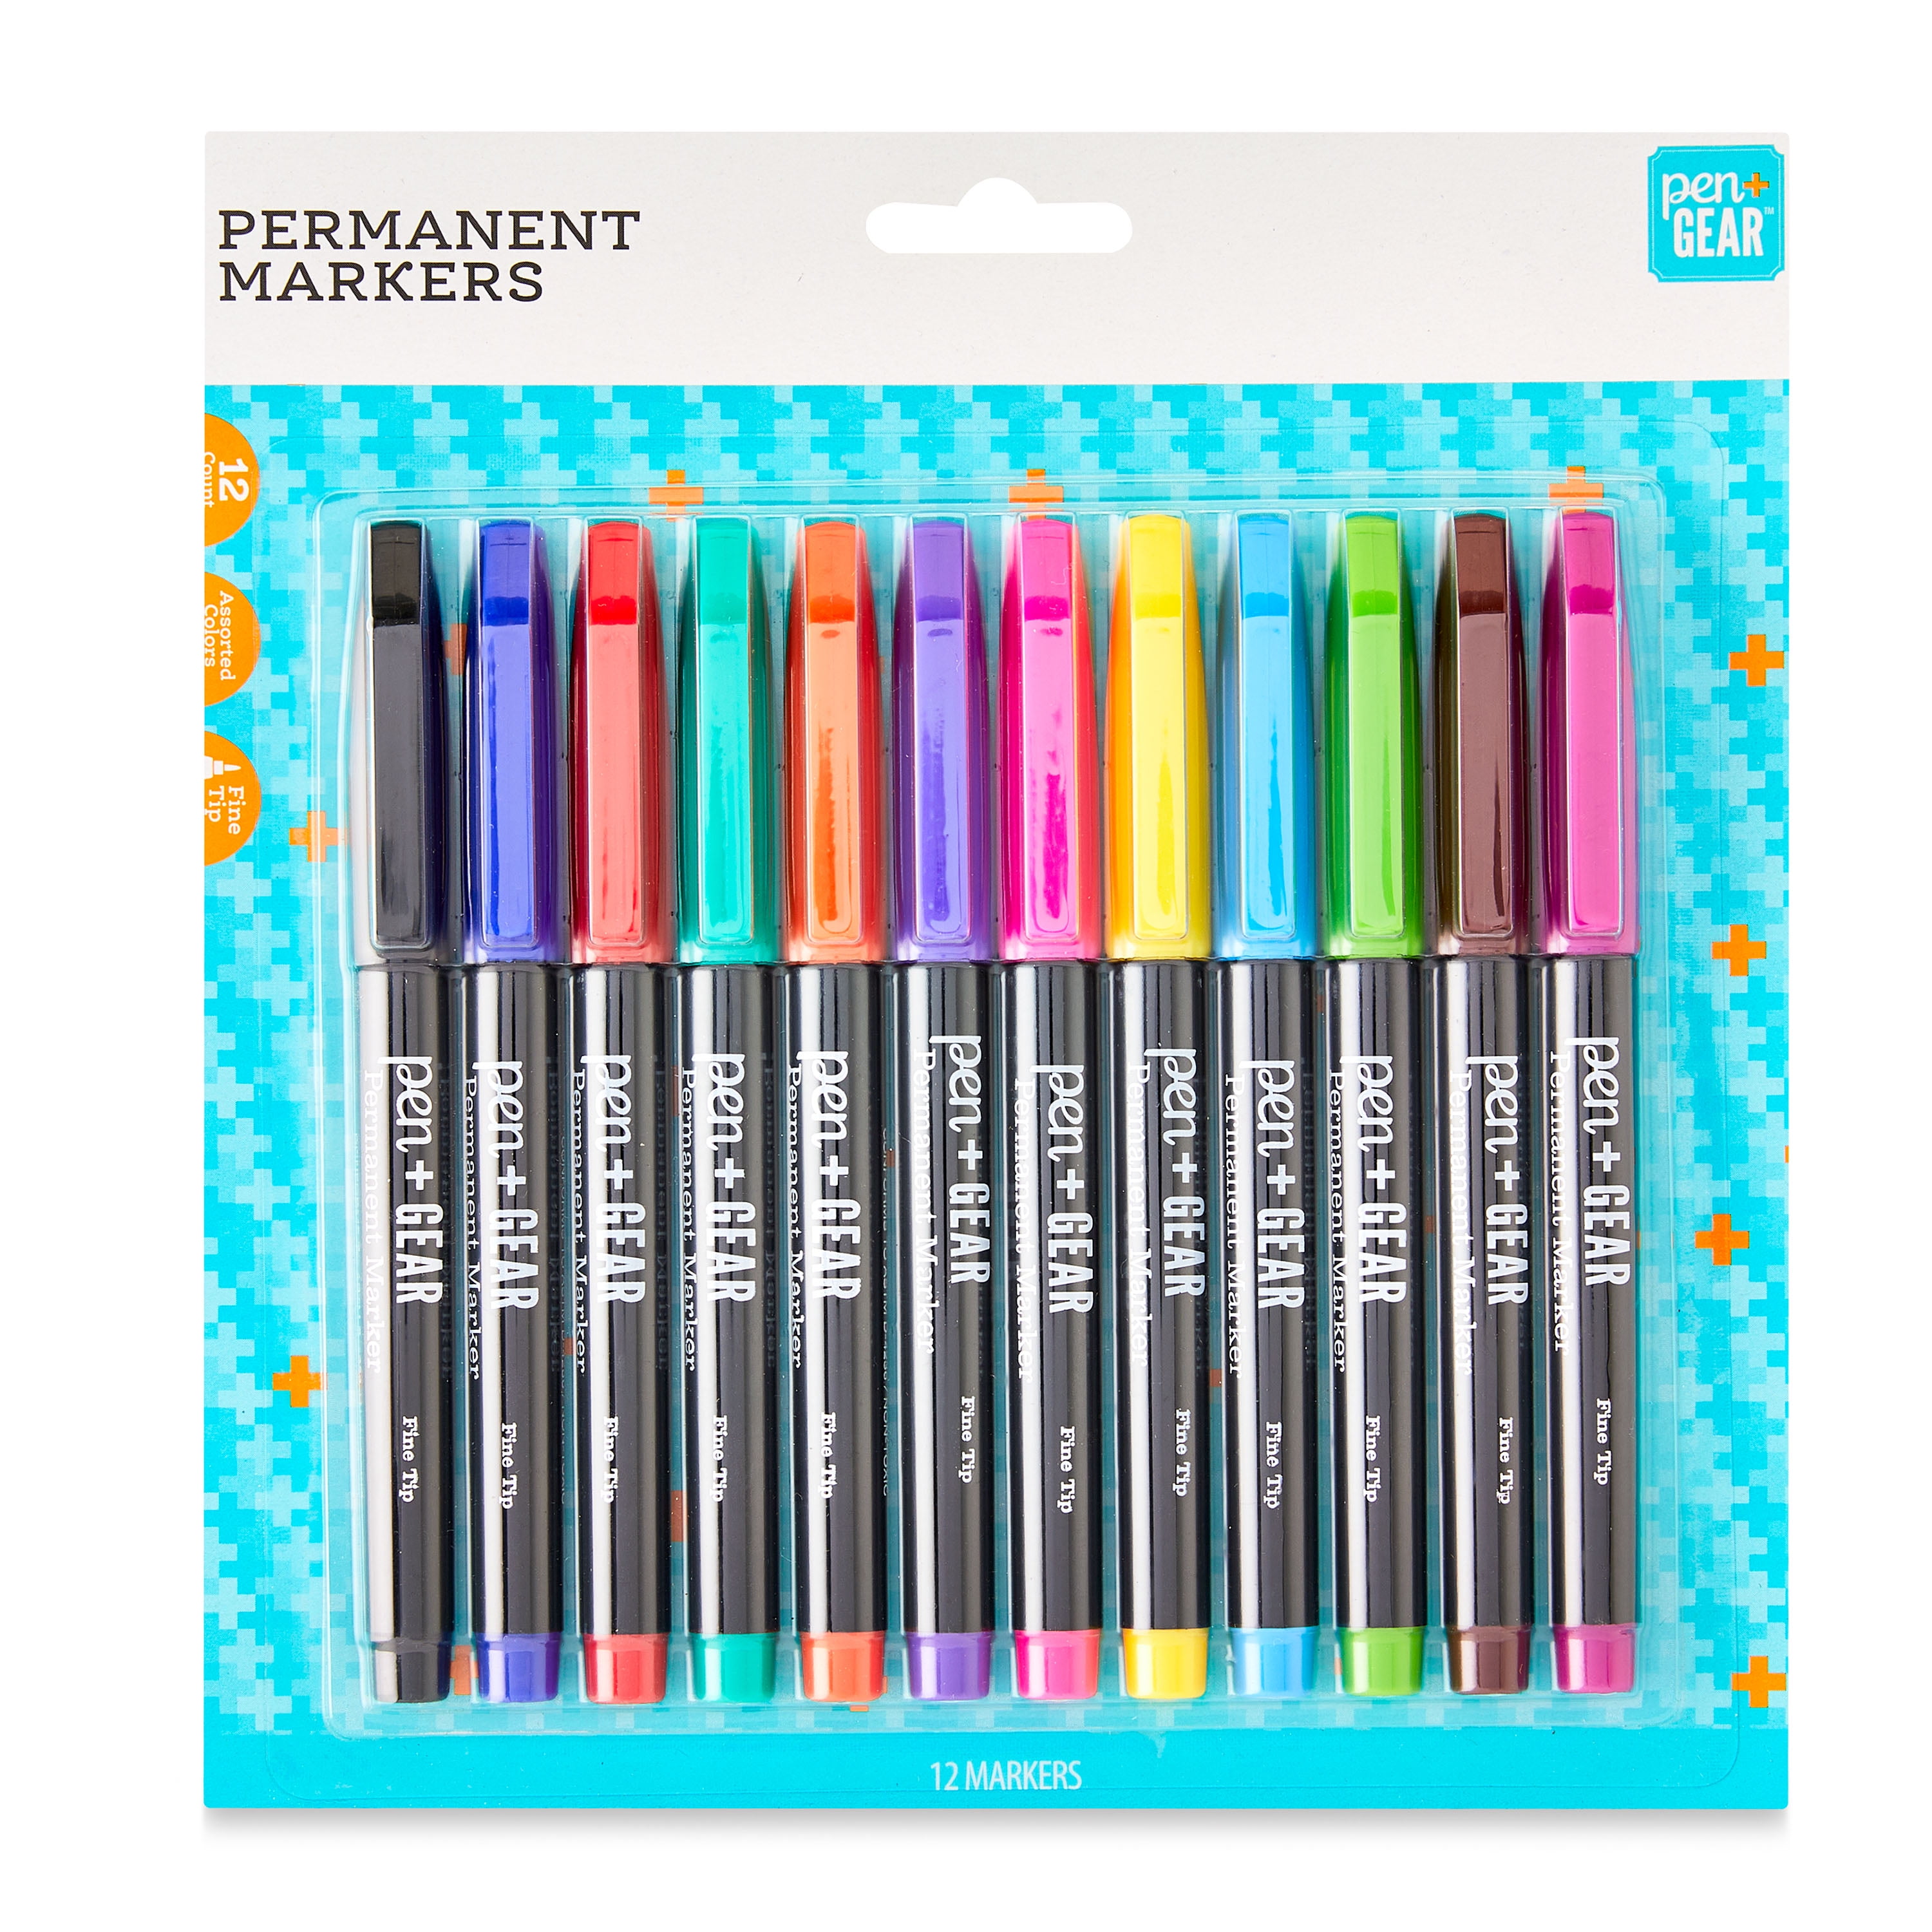 Pen+Gear Permanent Marker, Fine Tip, 12 Count, Assorted Colors